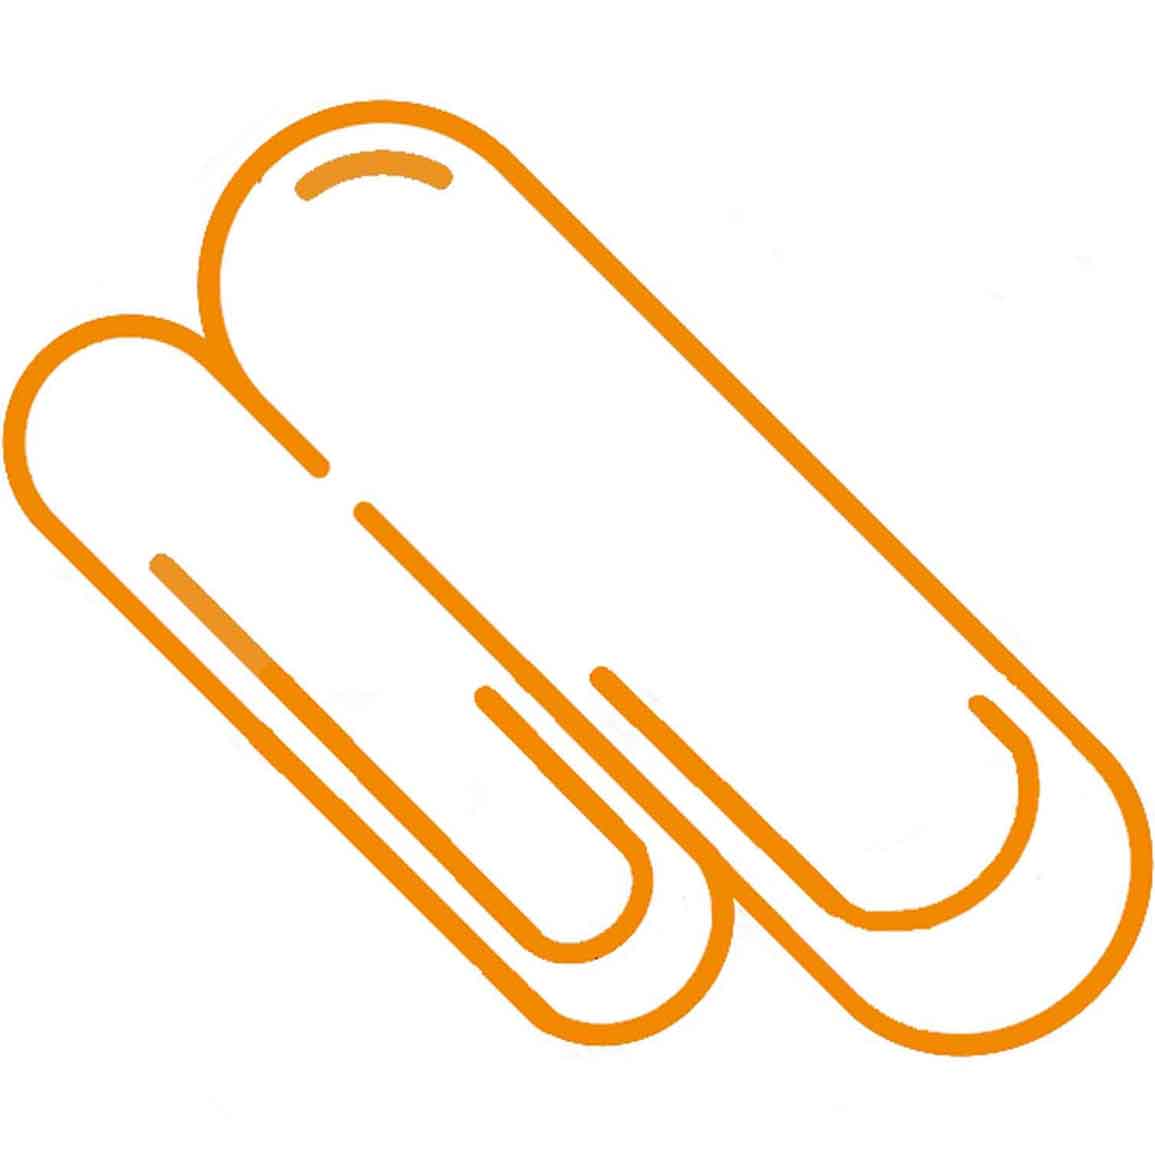 key steel icon